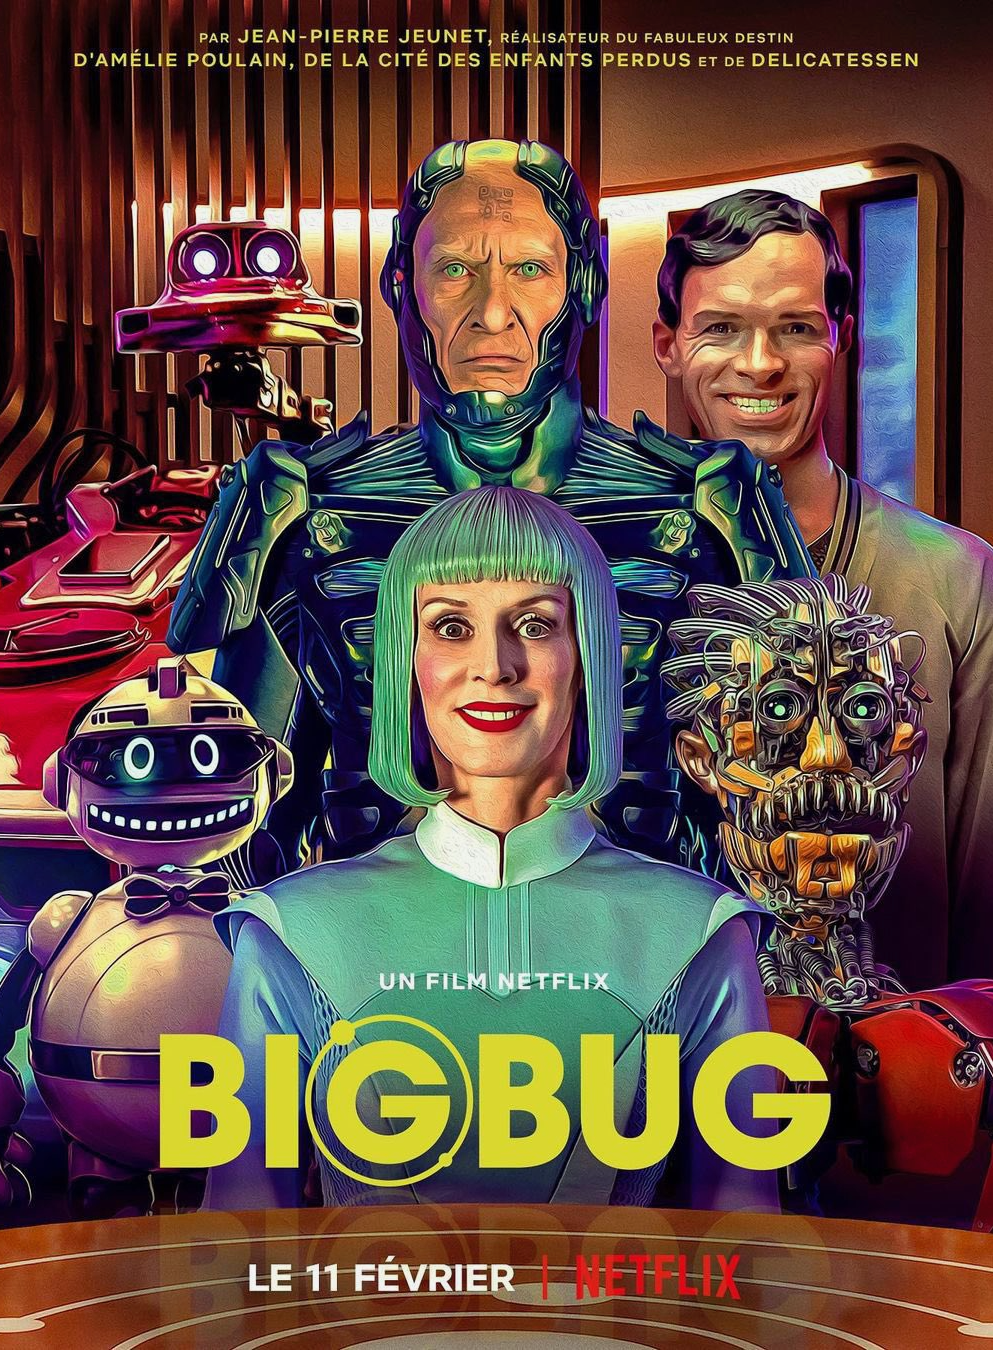 BigBug : critique sex machina sur Netflix